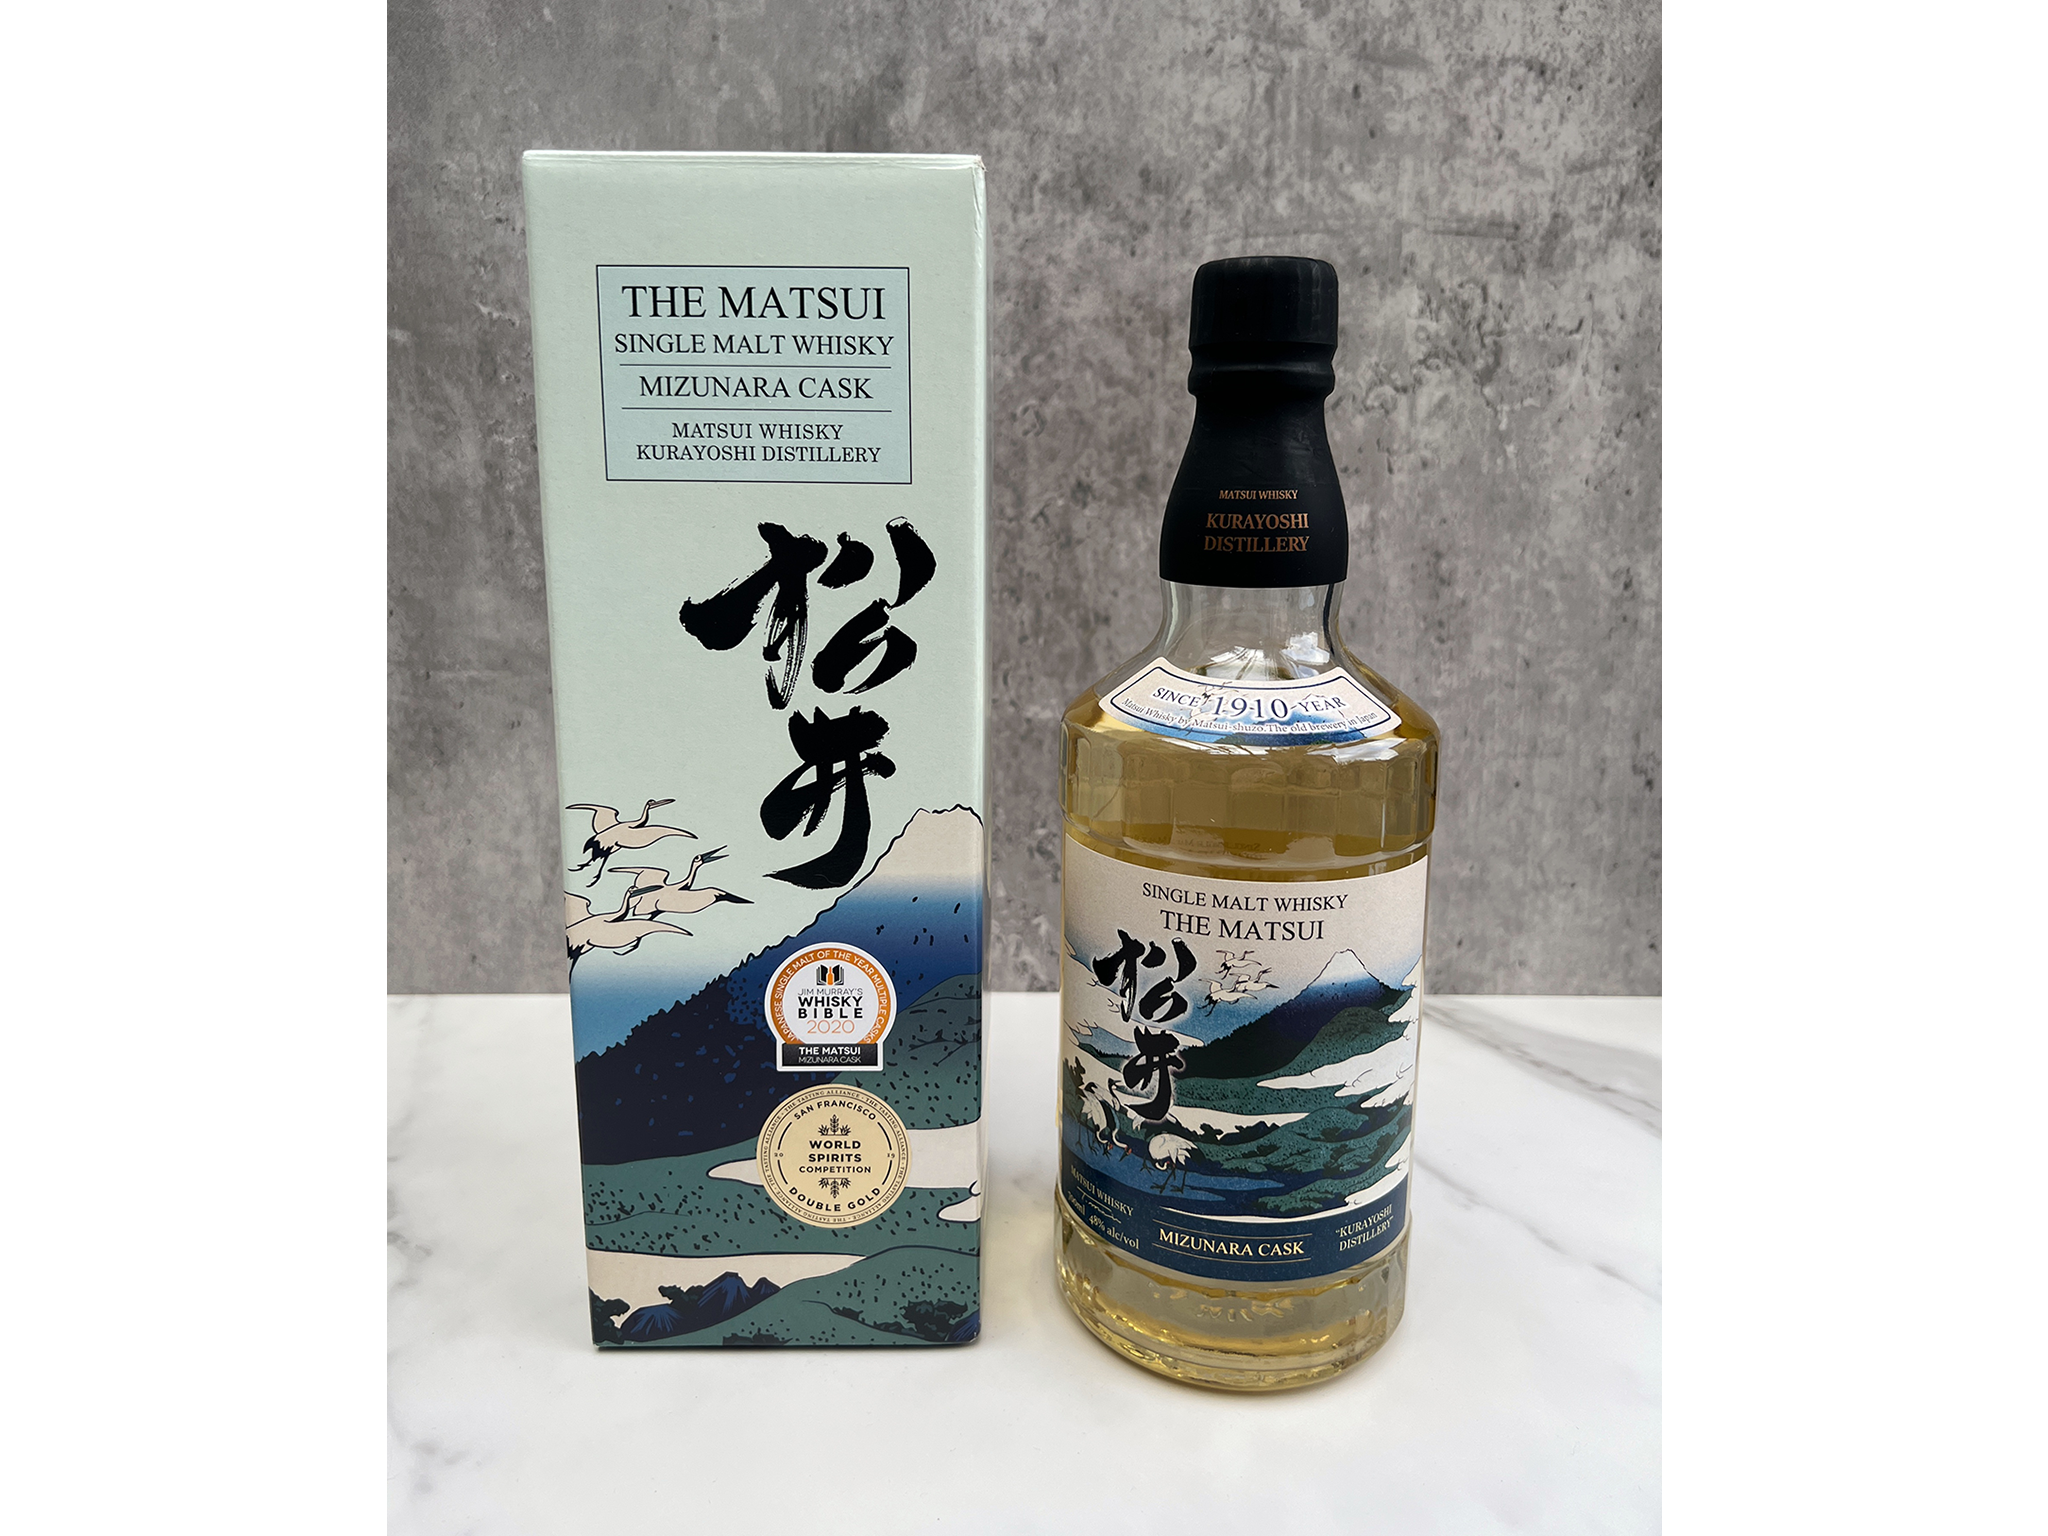 The Matsui single malt Japanese whisky mizunara cask